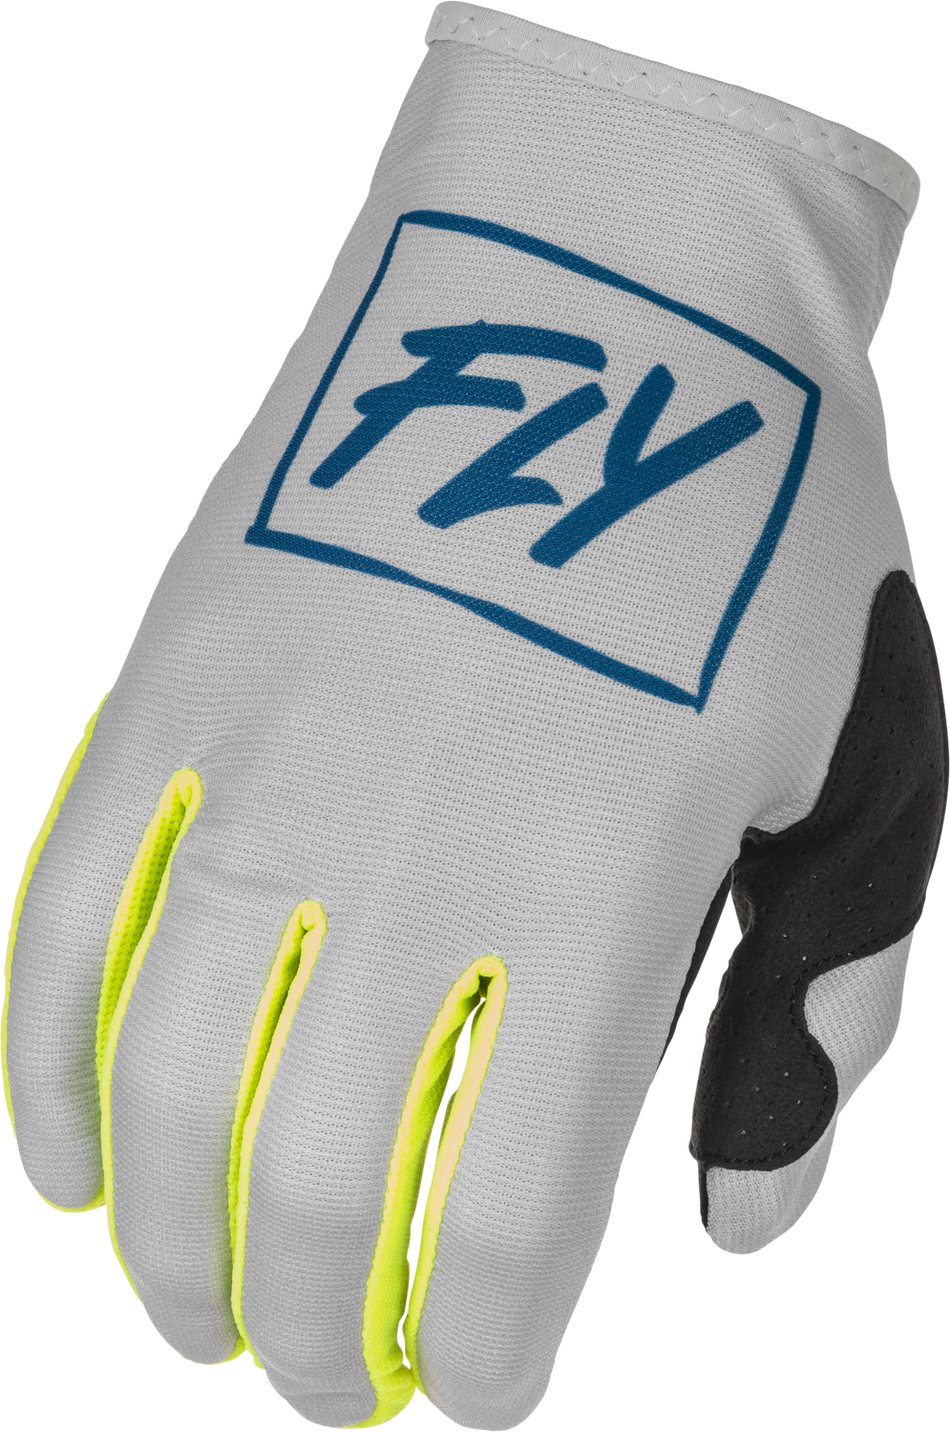 FLY RACING Lite Gloves Grey/Teal/Hi-Vis Md 375-711M